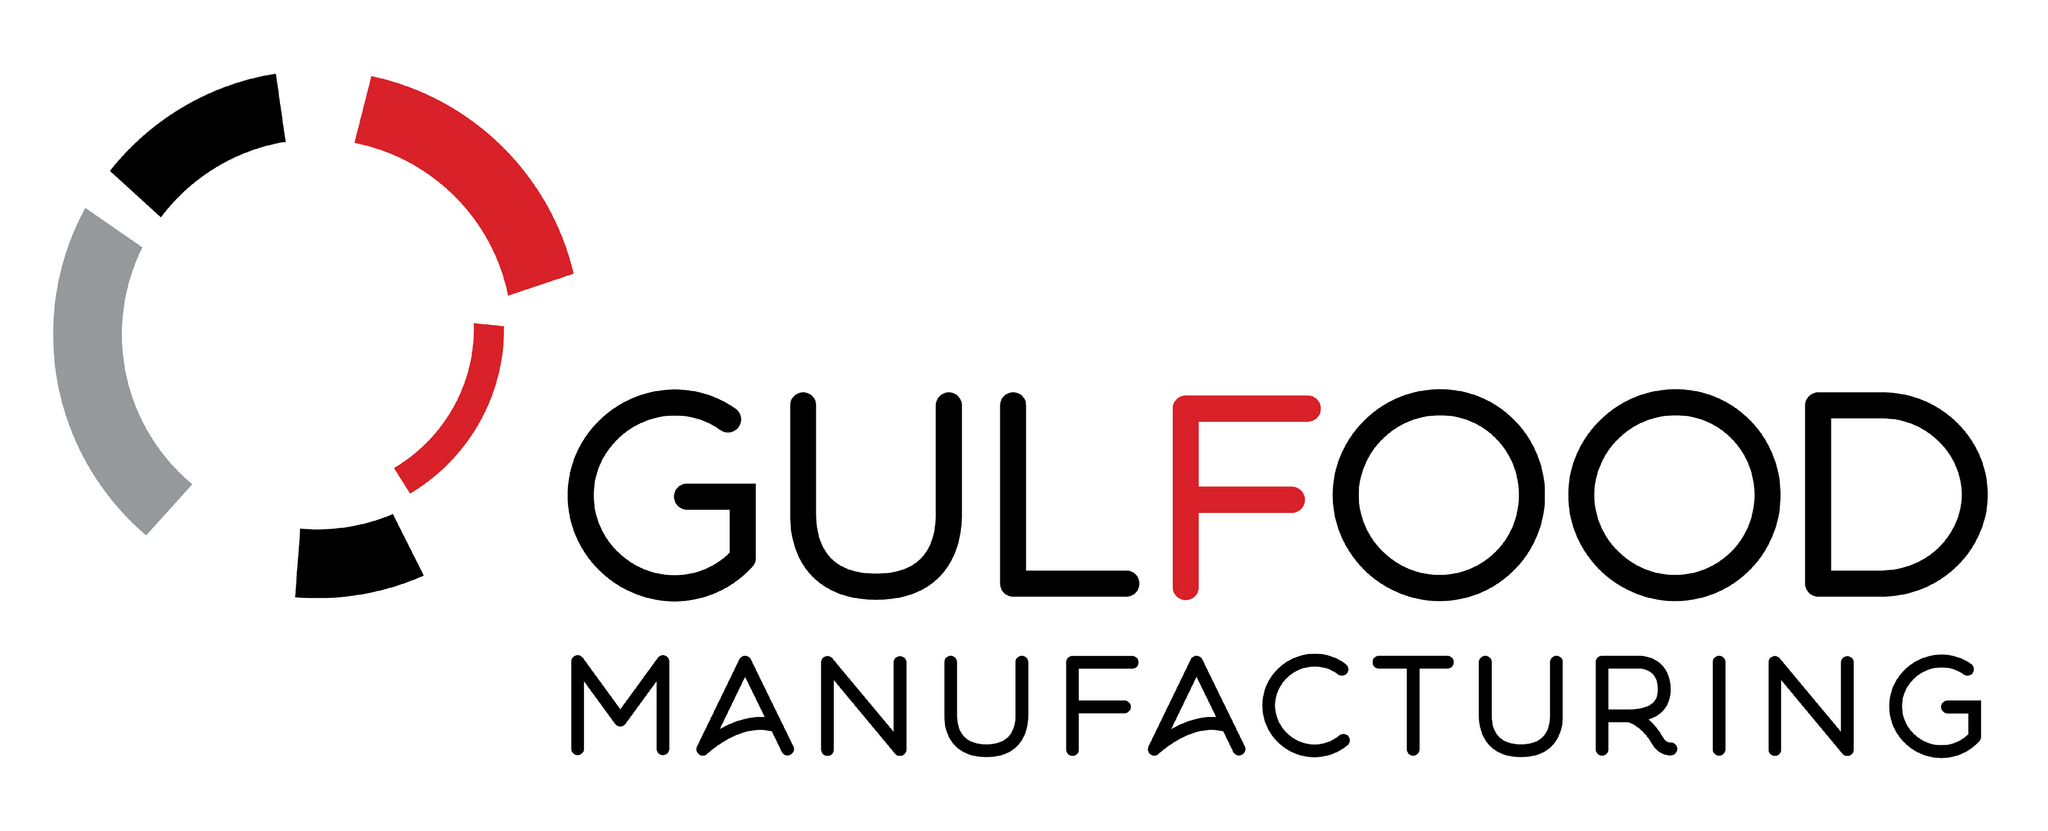  GulFood Manufacturing 2021